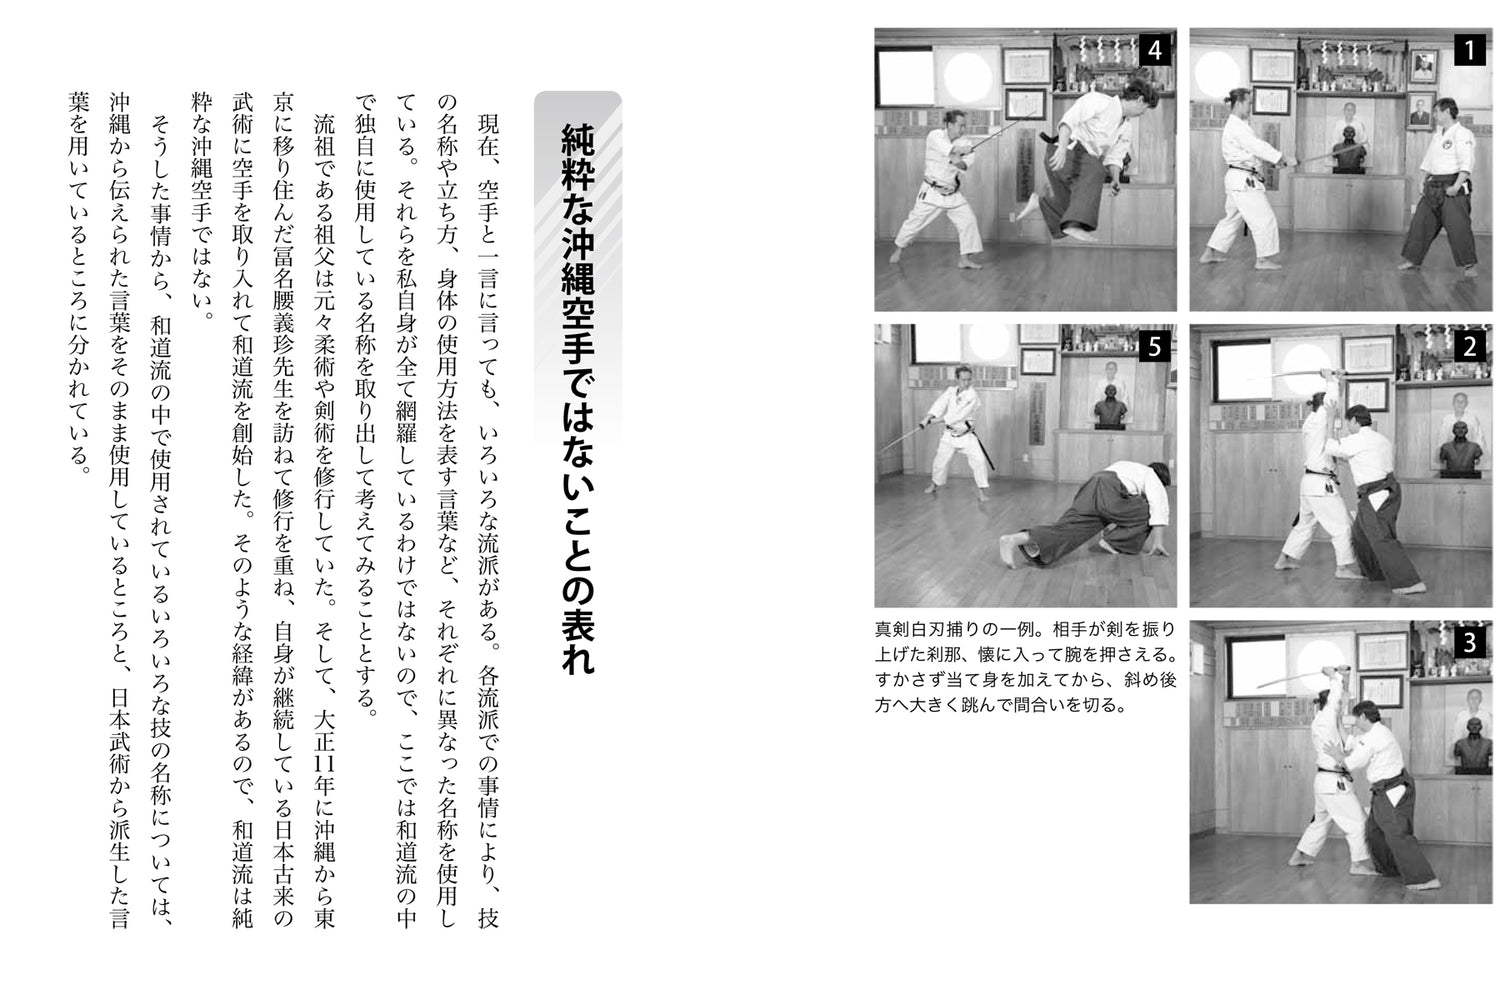 Master Wado Ryu Karate Book by Hironori Otsuka